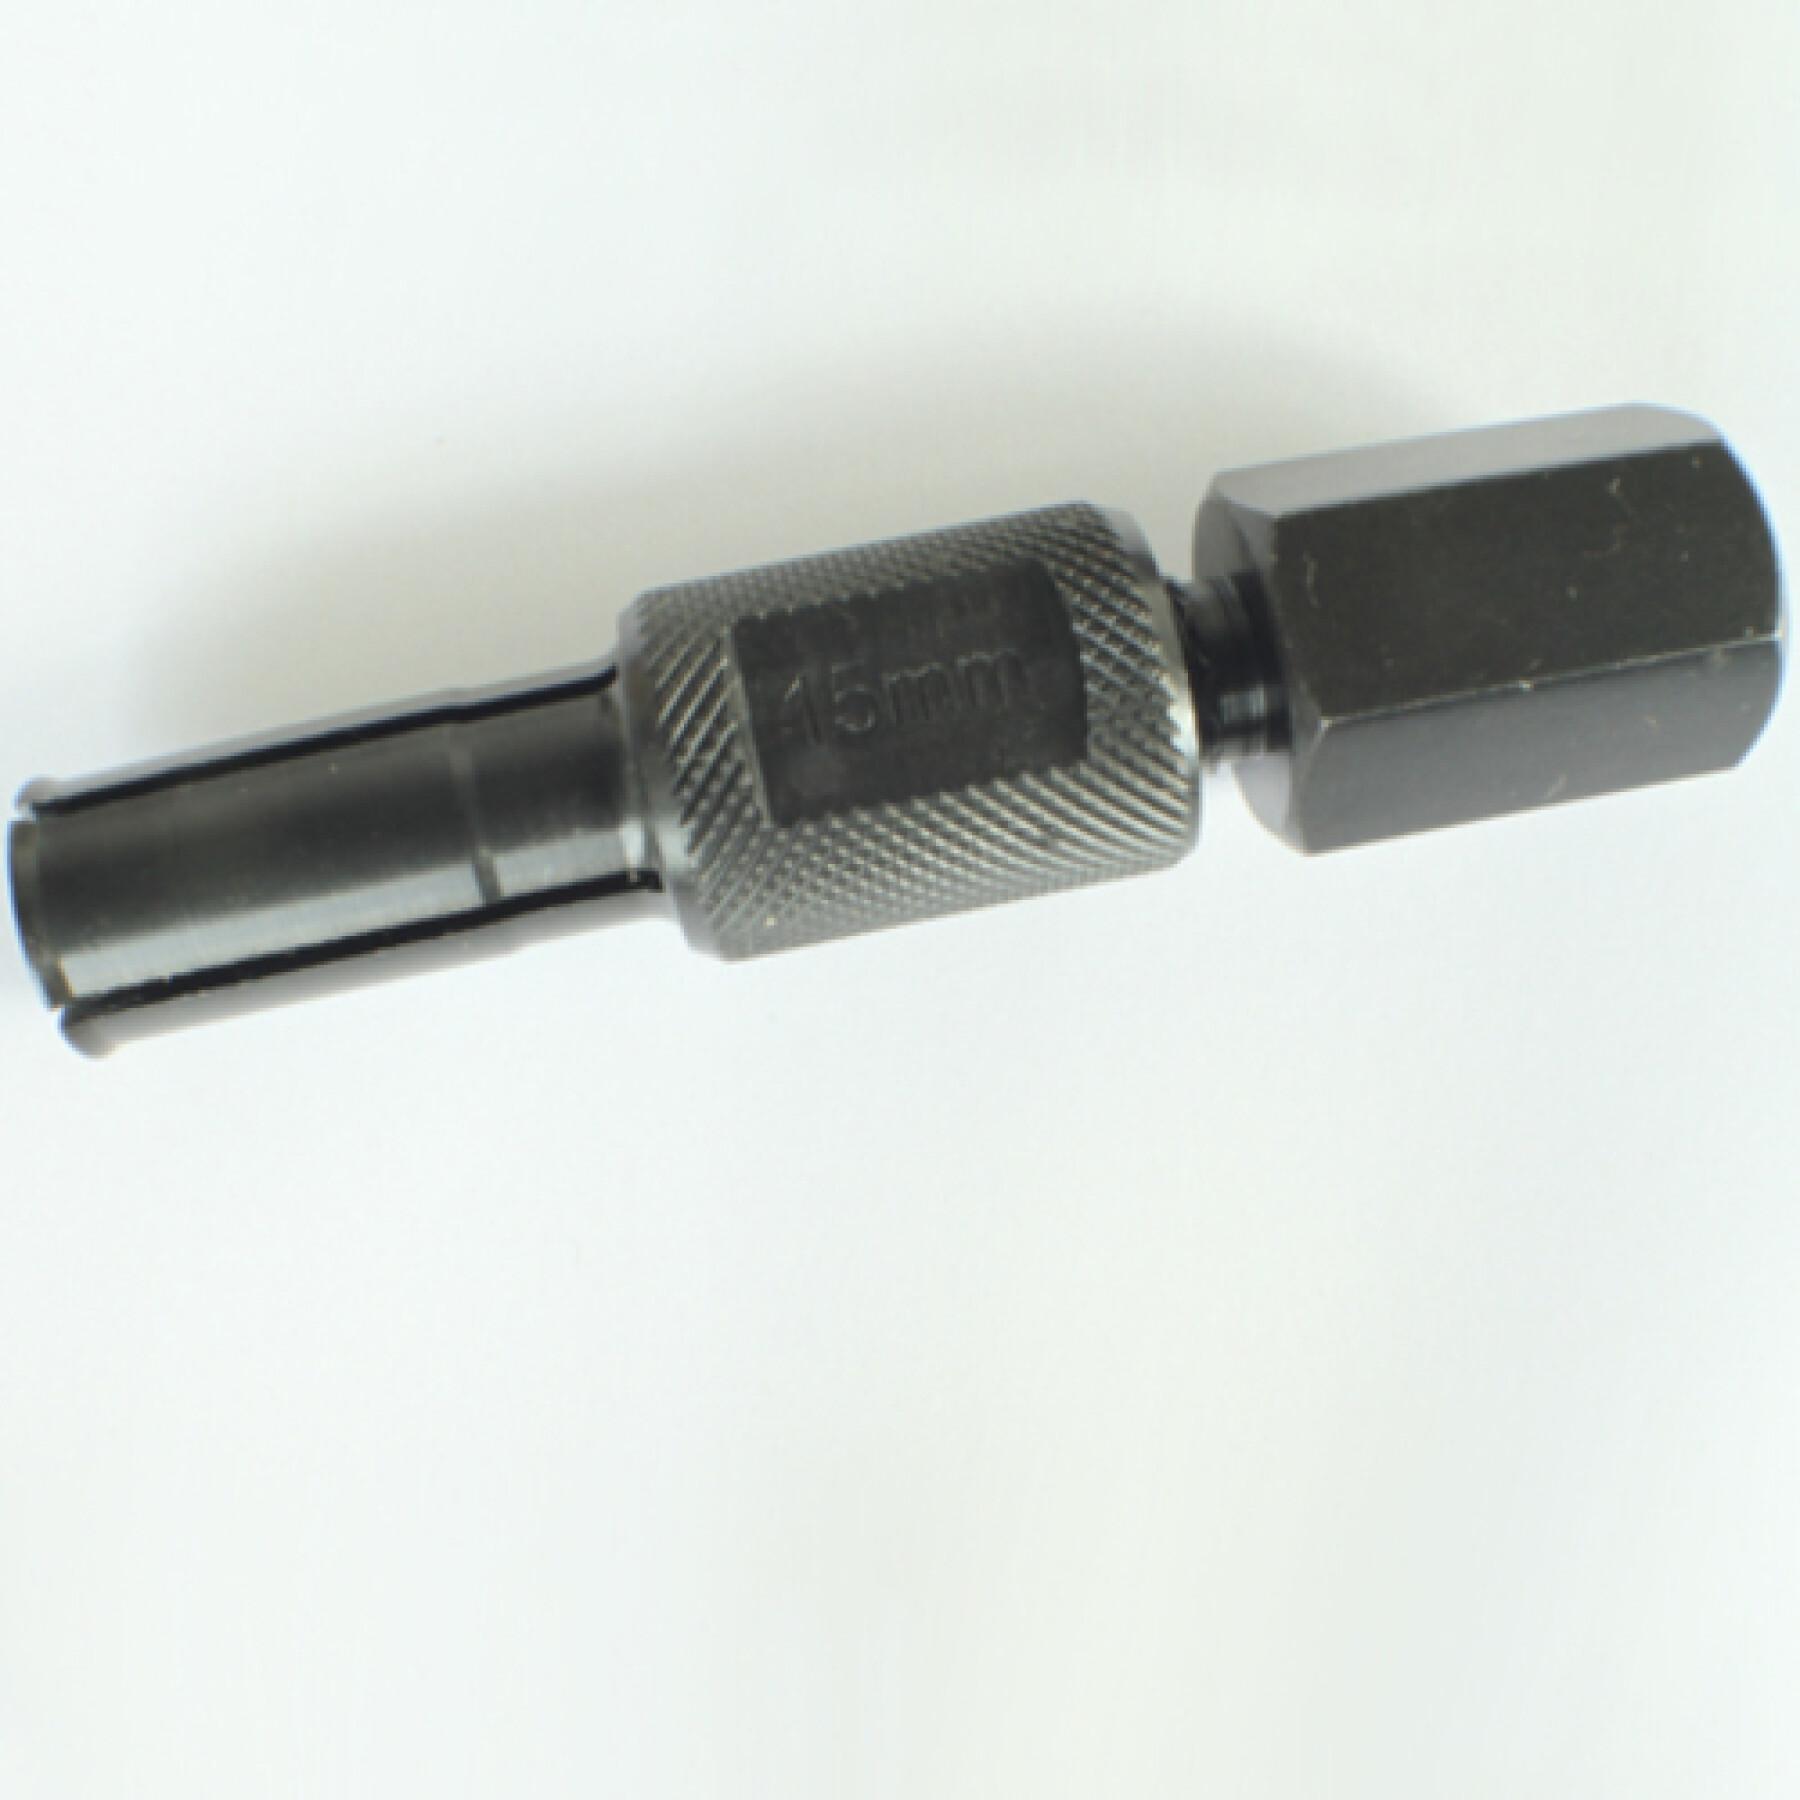 Łożyska Enduro Bearings Puller for 15-17mm